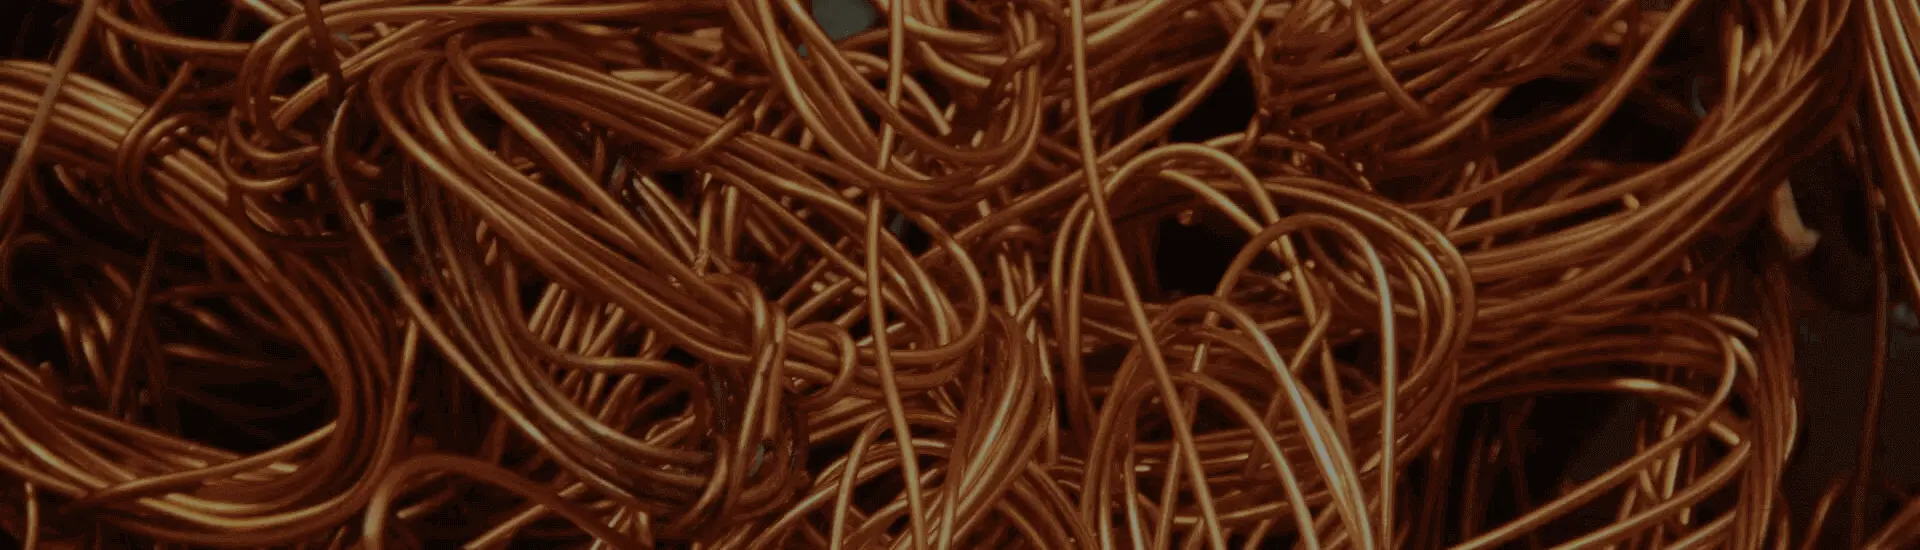 a close up of copper wire